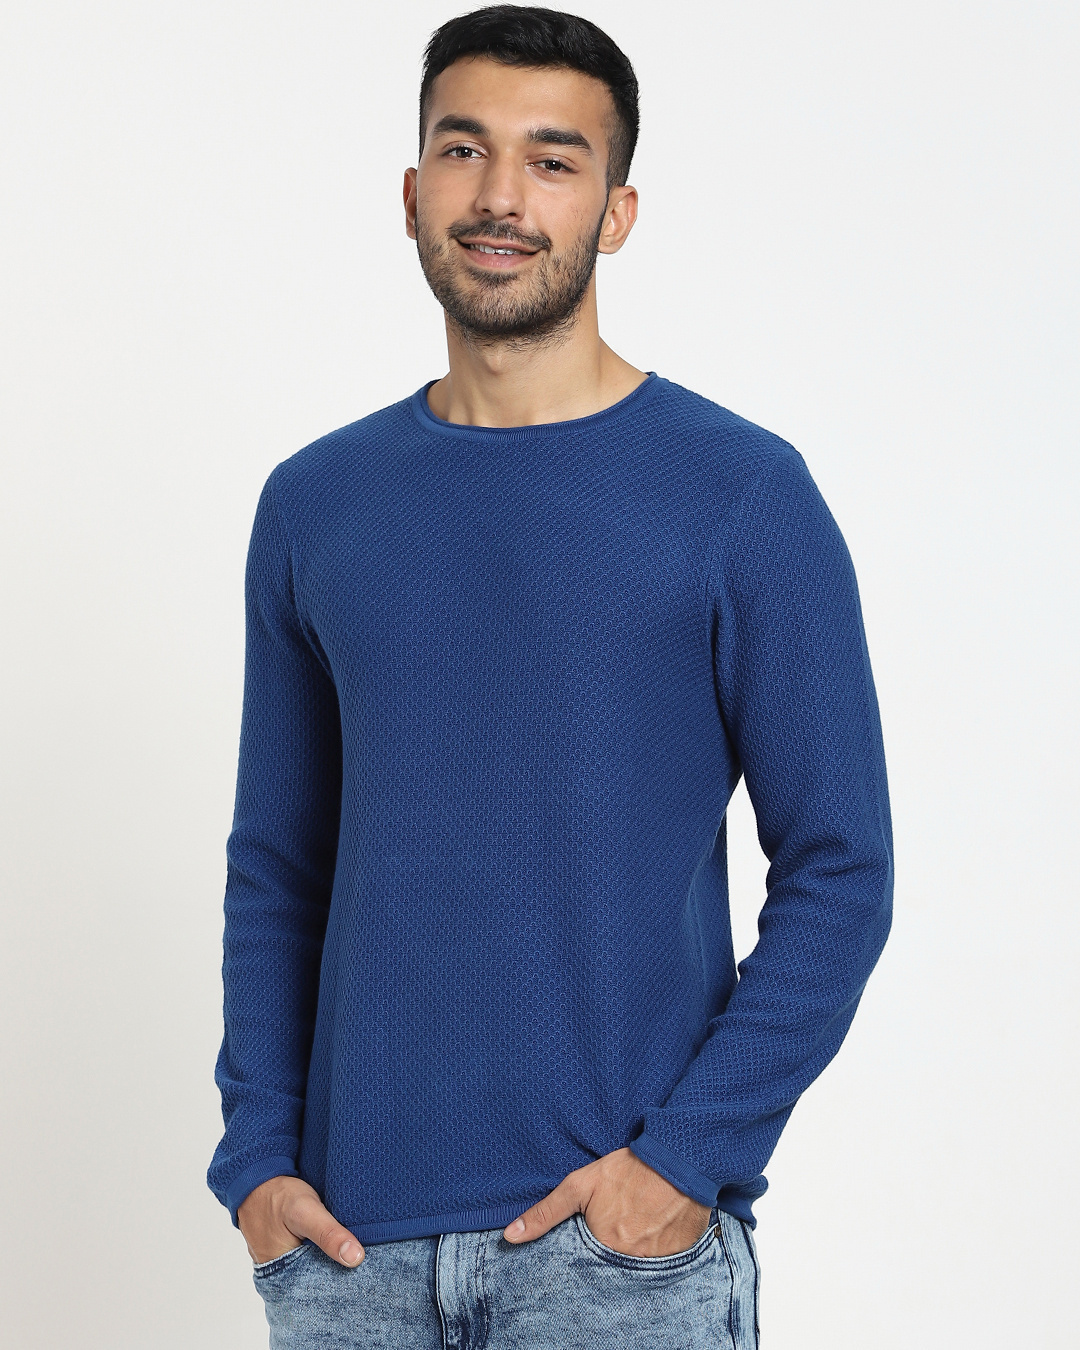 Buy Men's Blue Quartz Flat Knit Sweater Online at Bewakoof